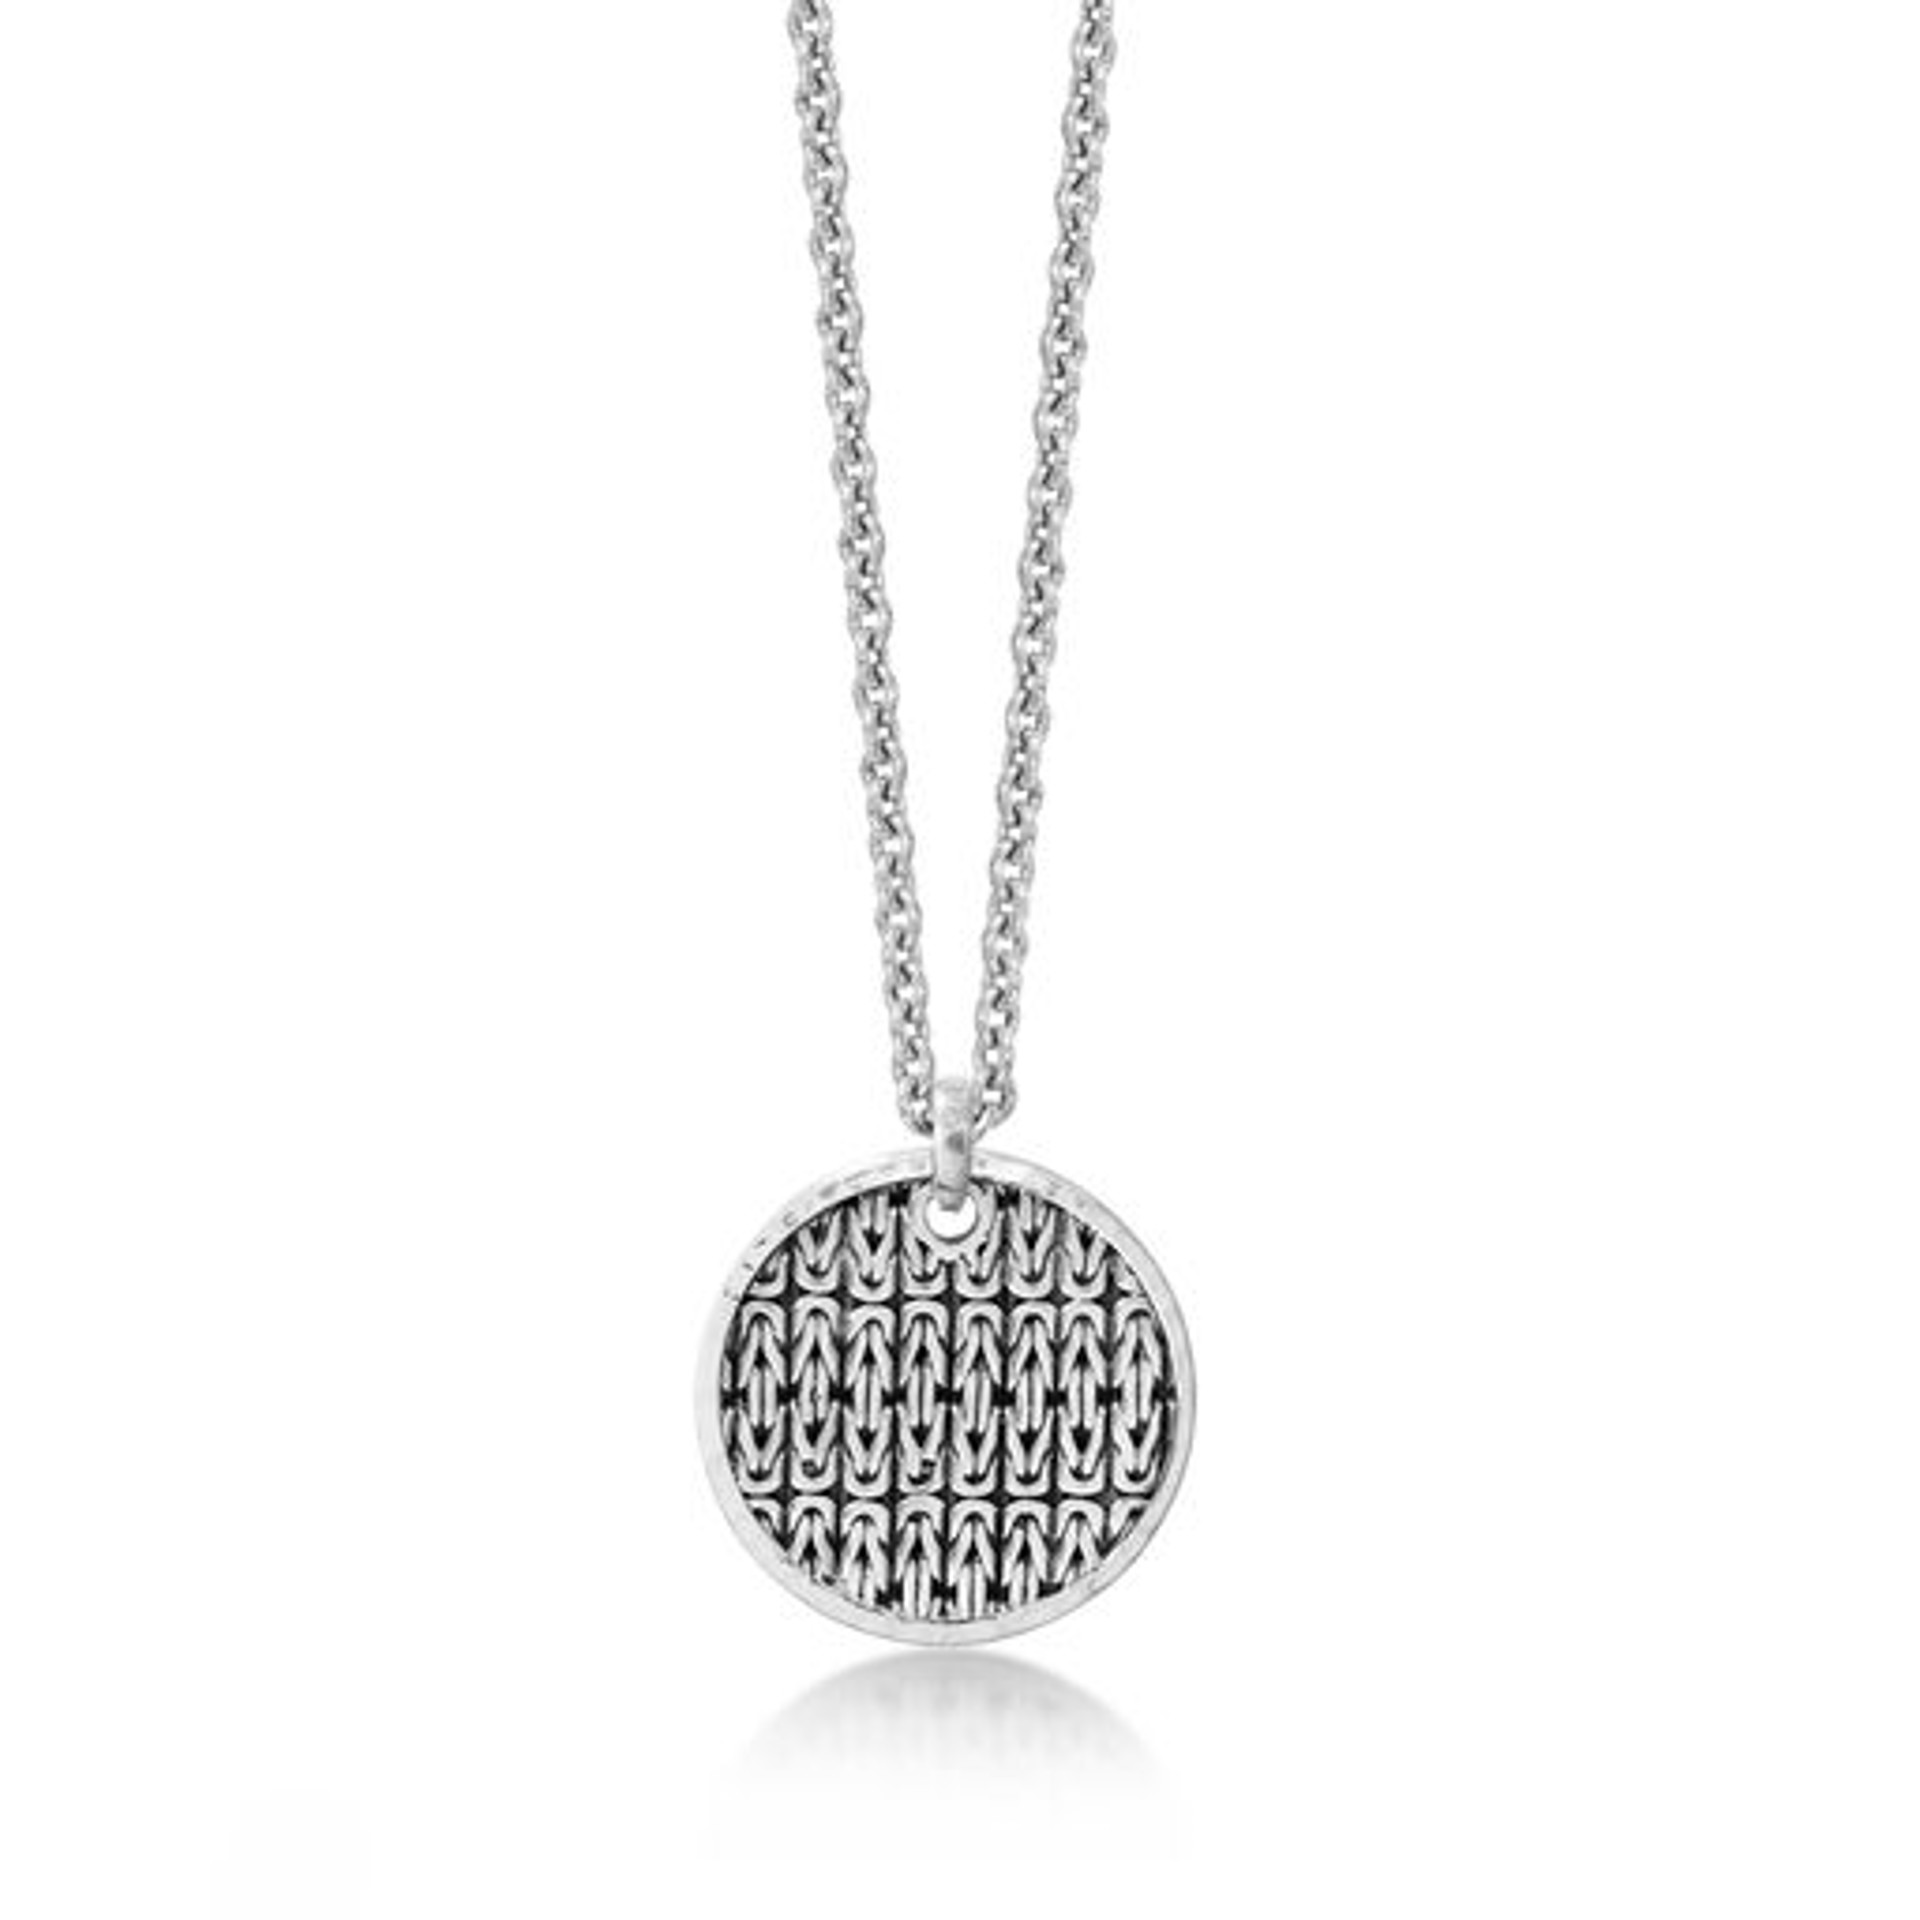 7017 Men's Silver Pendant Necklace by Lois Hill